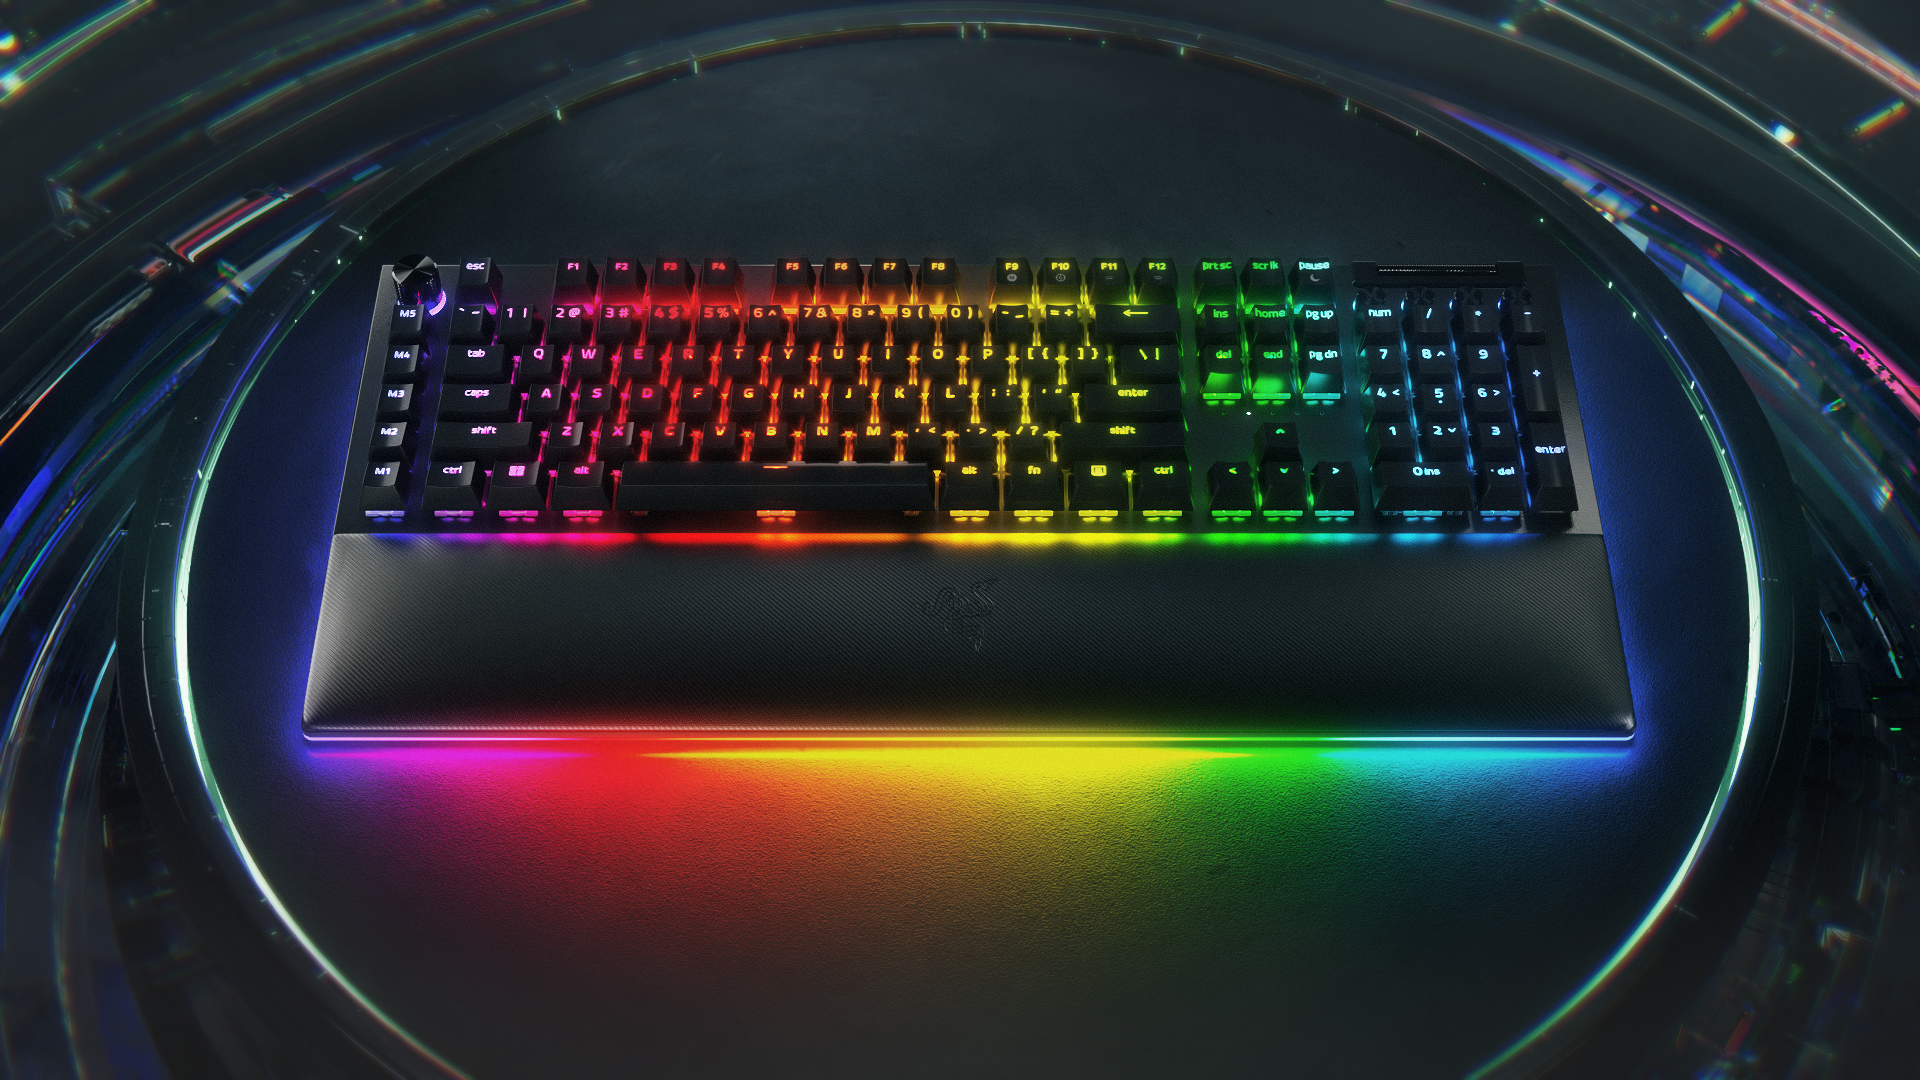 An Illuminating Look at Razer Keyboard Capabilities | TechBytes 360